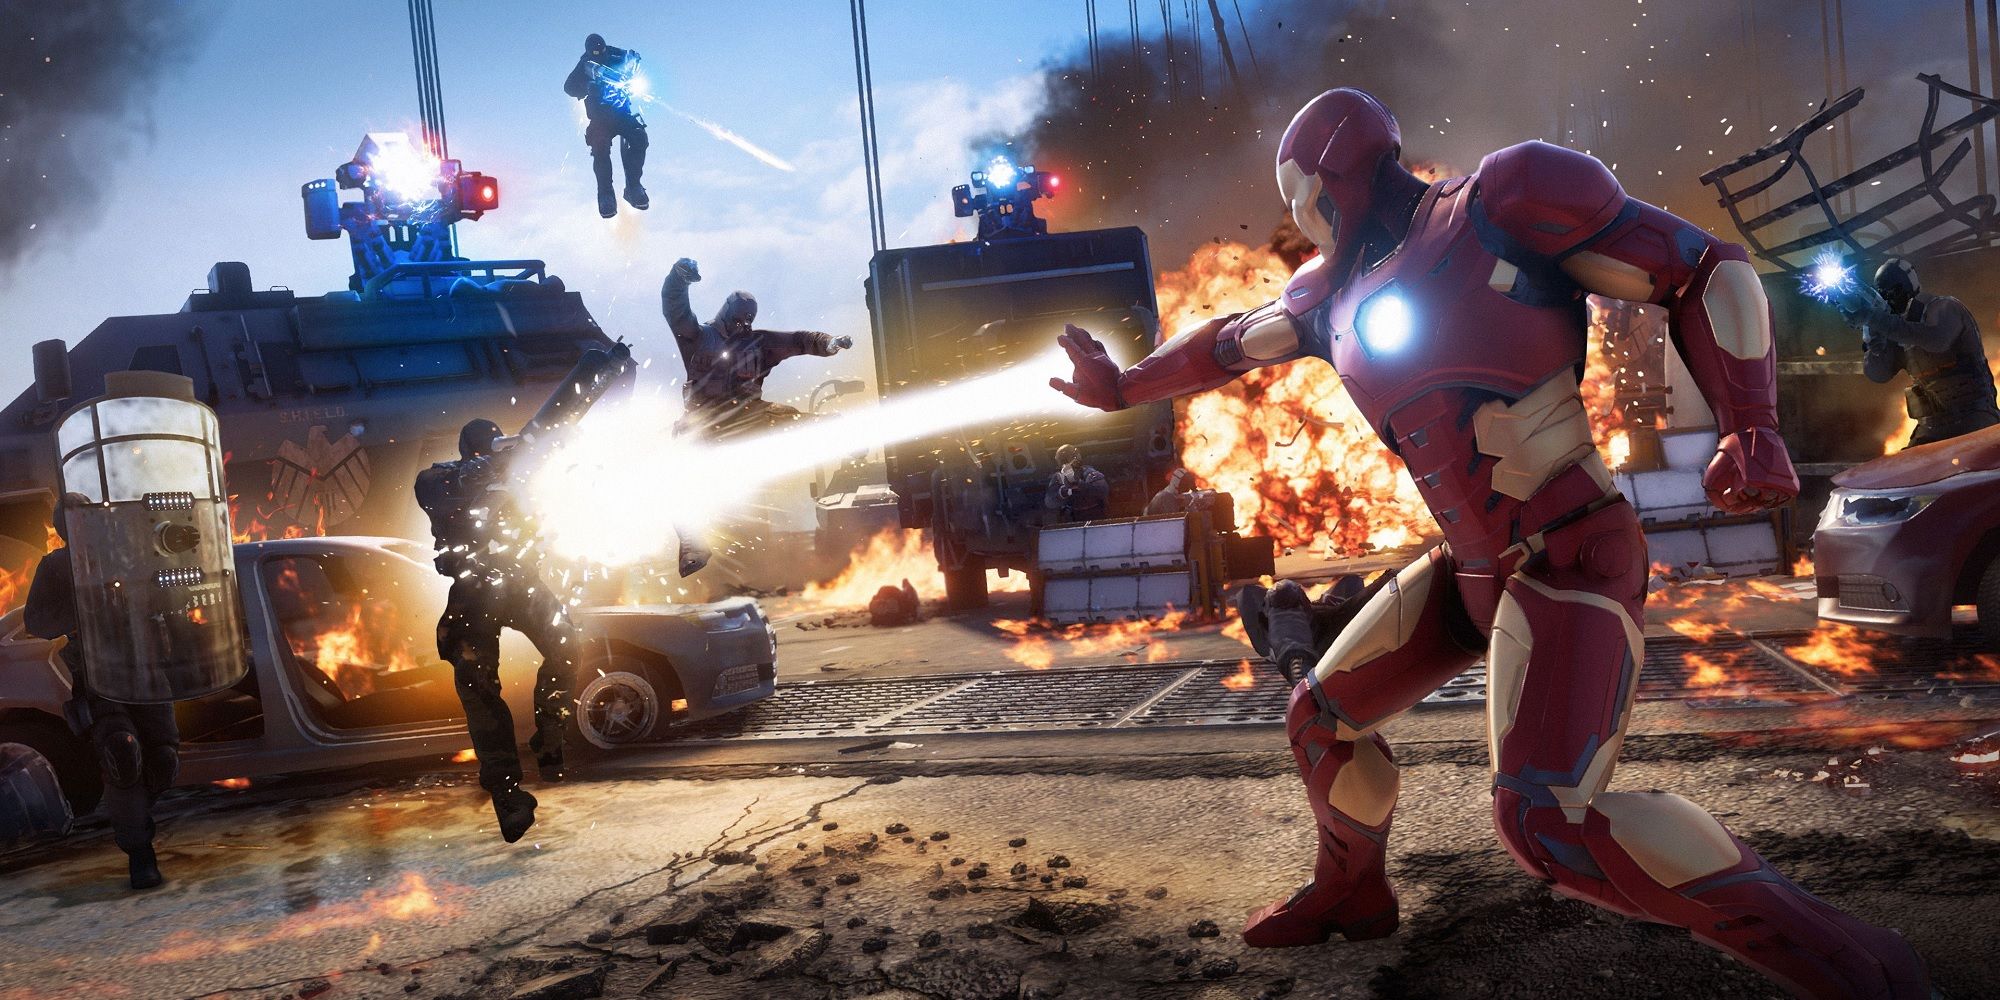 Screenshot from the Marvel'sAvengers beta showing Iron Man fighting.